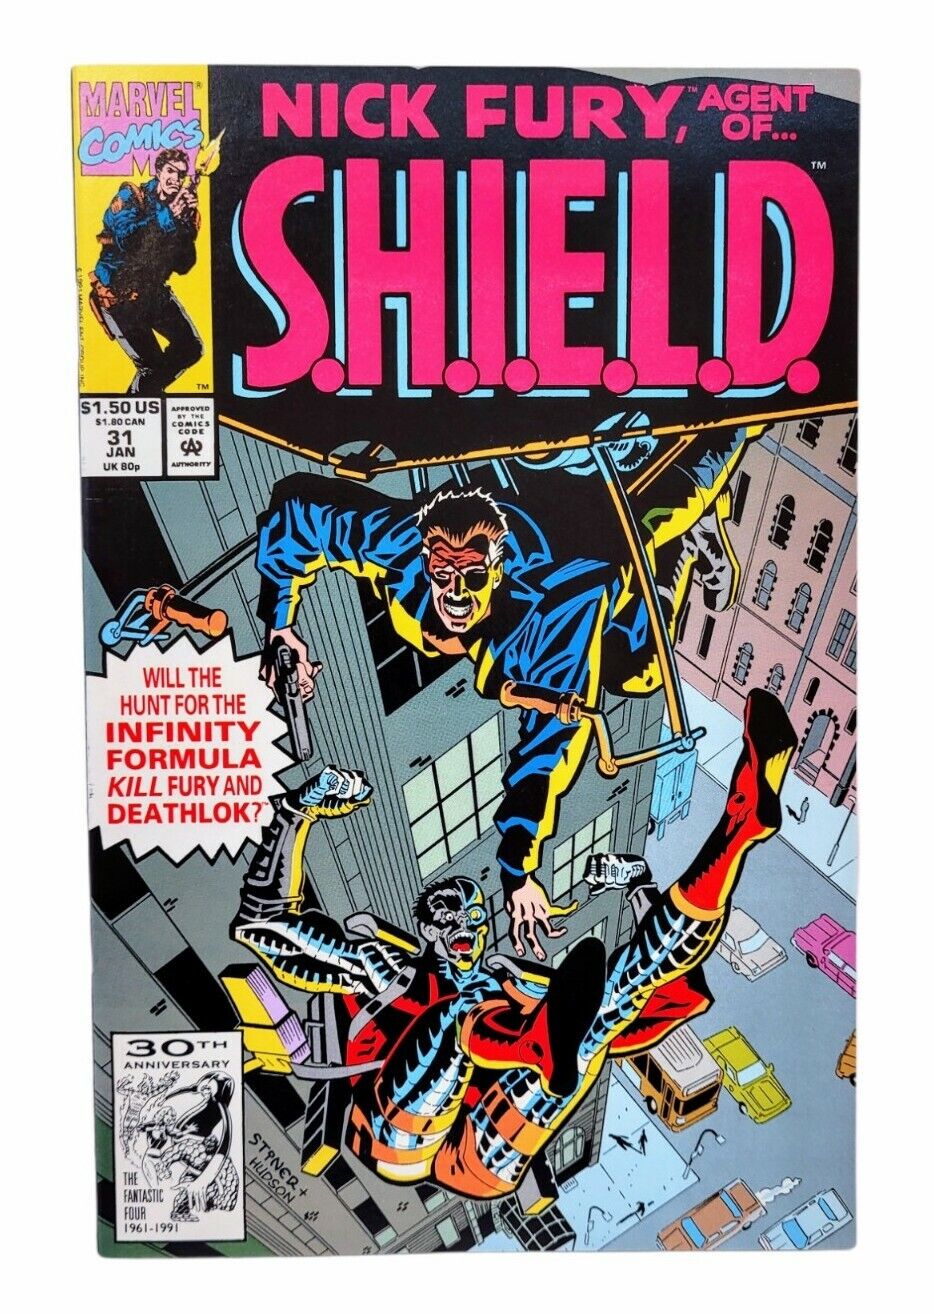 NICK FURY AGENT OF SHIELD - COMIC BOOK VOL. 2  #31  MARVEL COMICS 1992